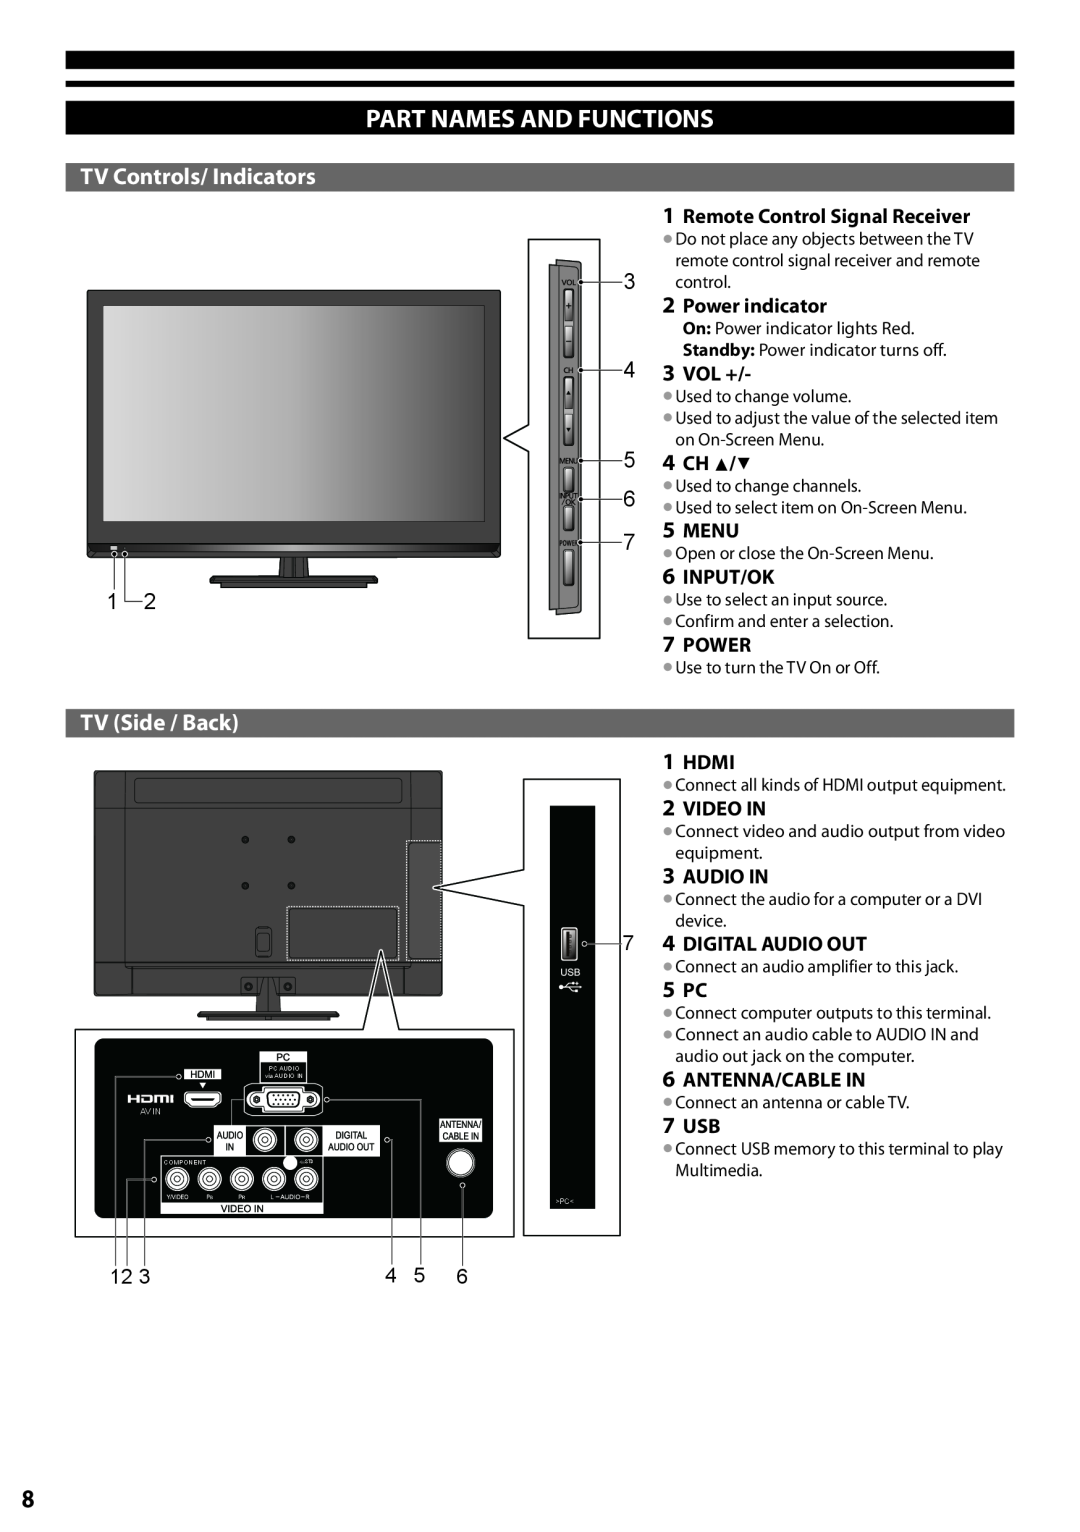 Panasonic TC-L24X5 owner manual Part Names And Functions, TV Controls/ Indicators, TV Side / Back 